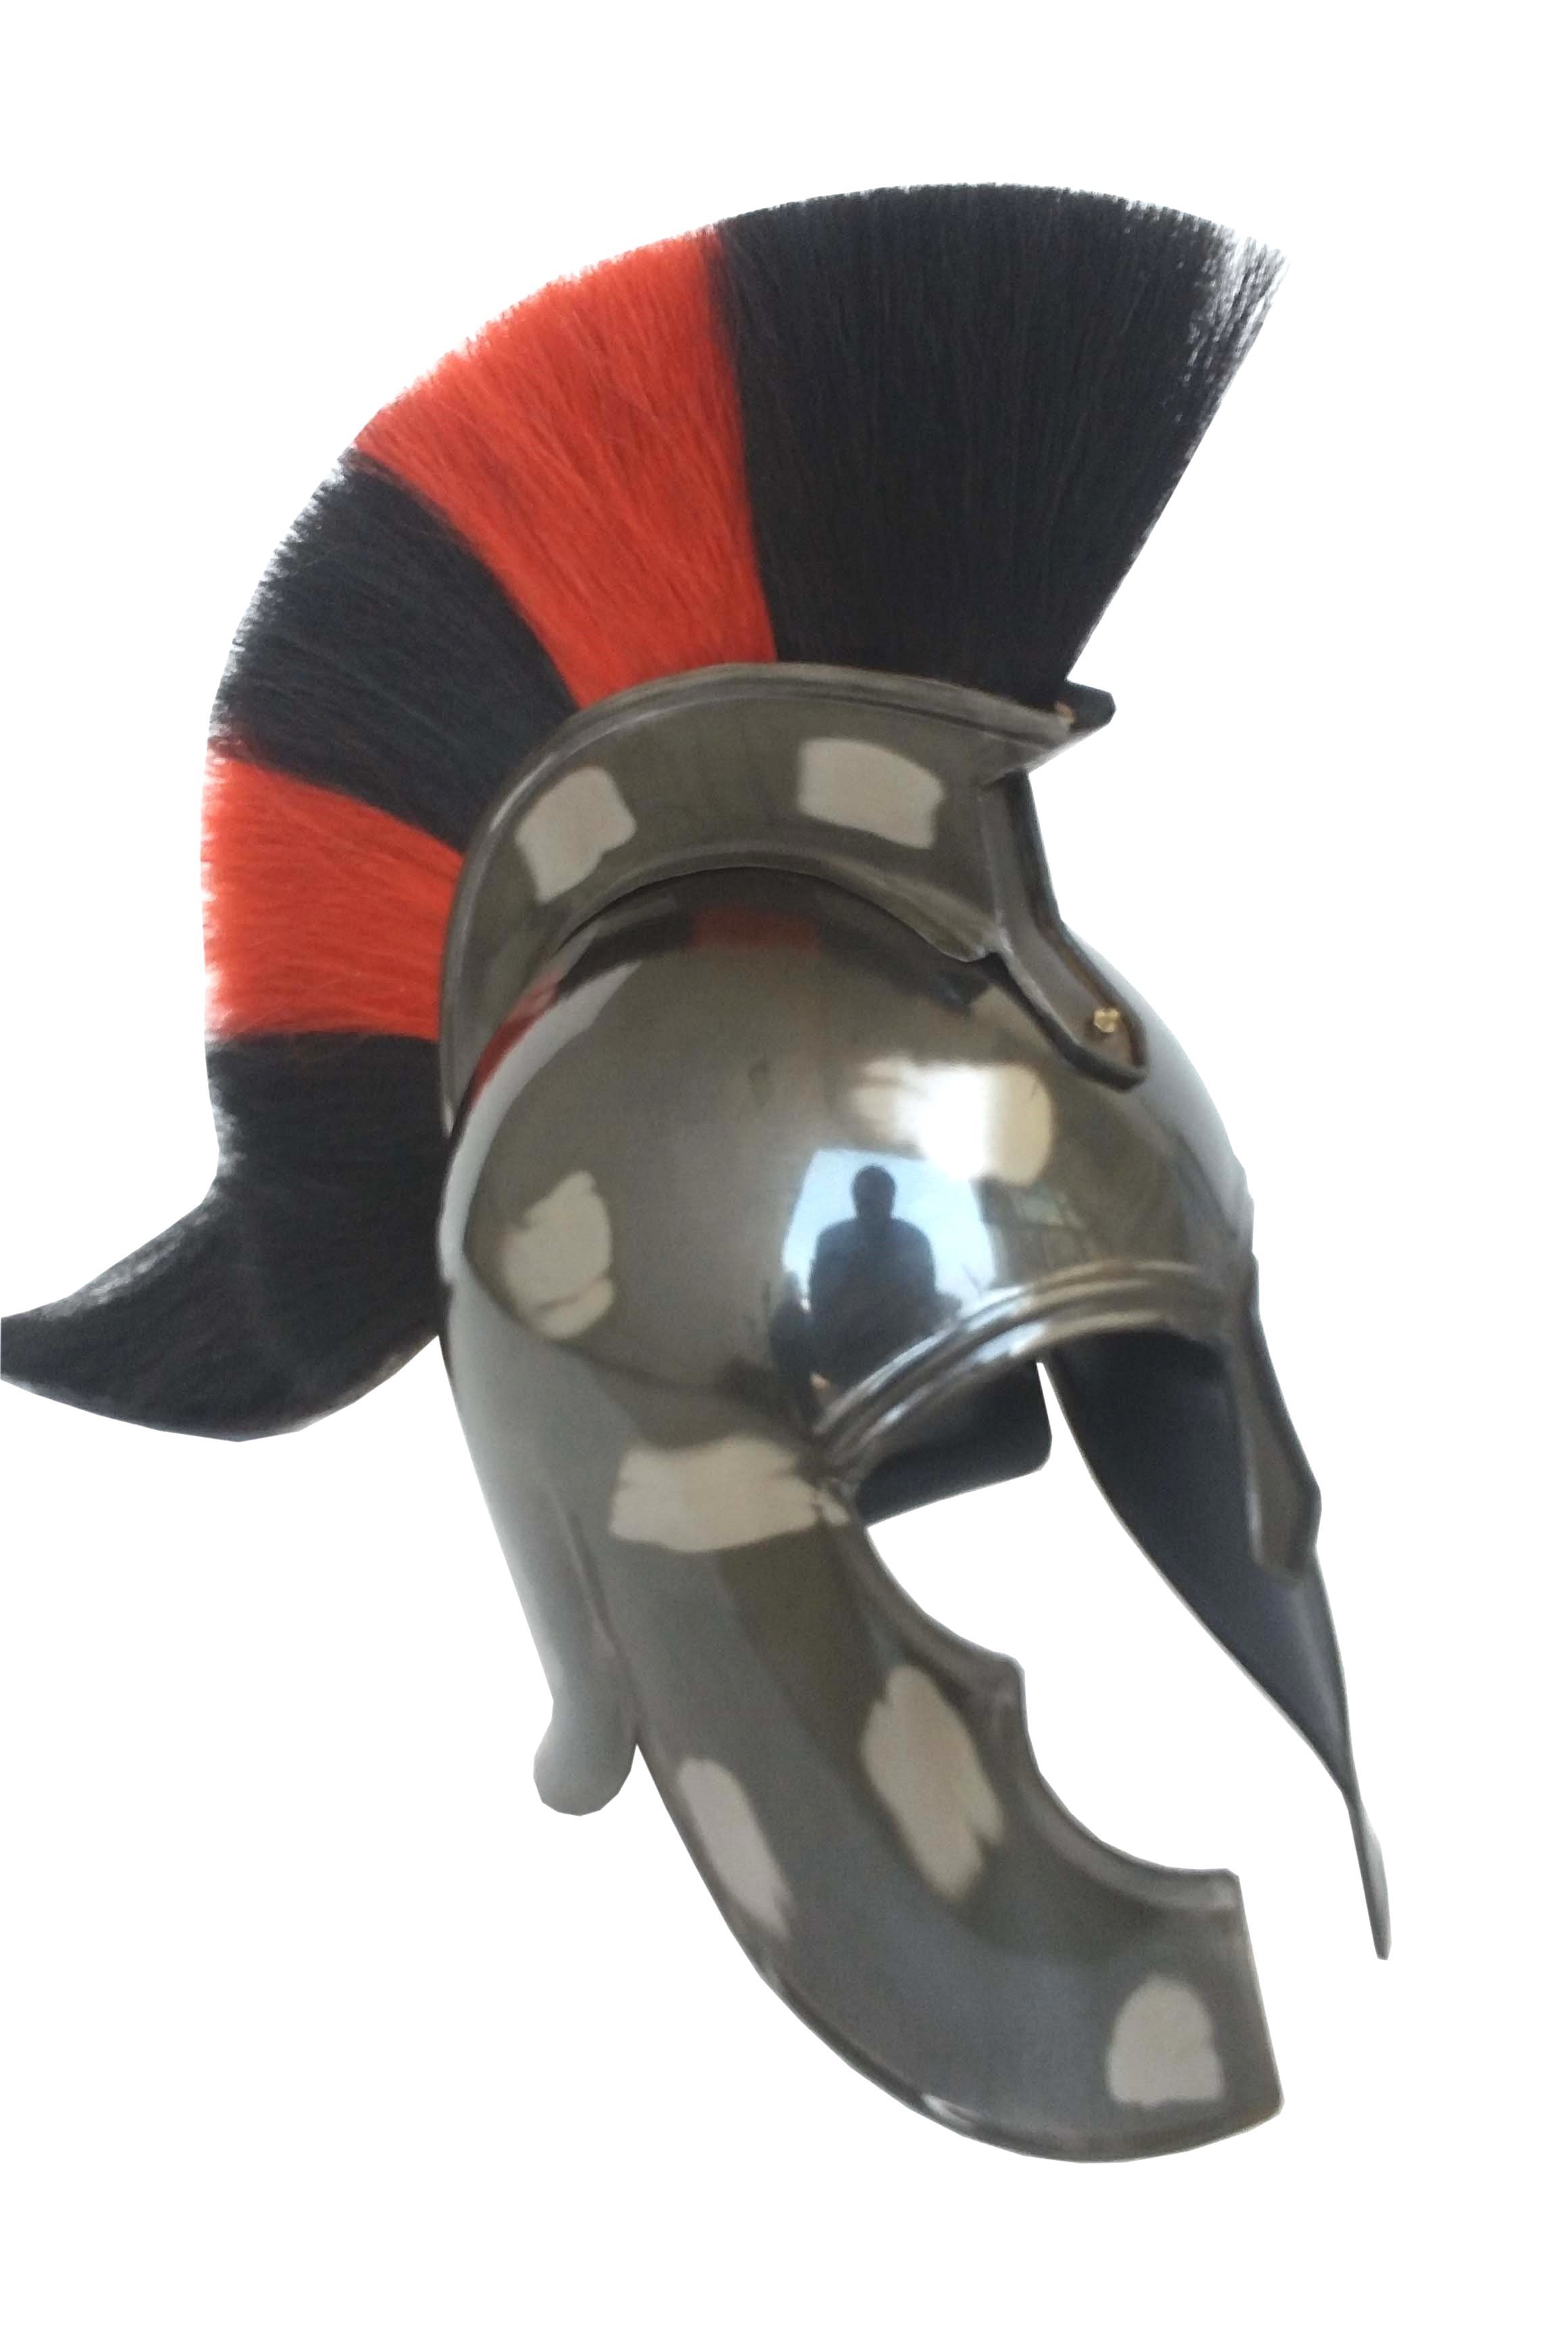 Black Antique Troy Movie Sparta Helmet w/Red & Black Plume